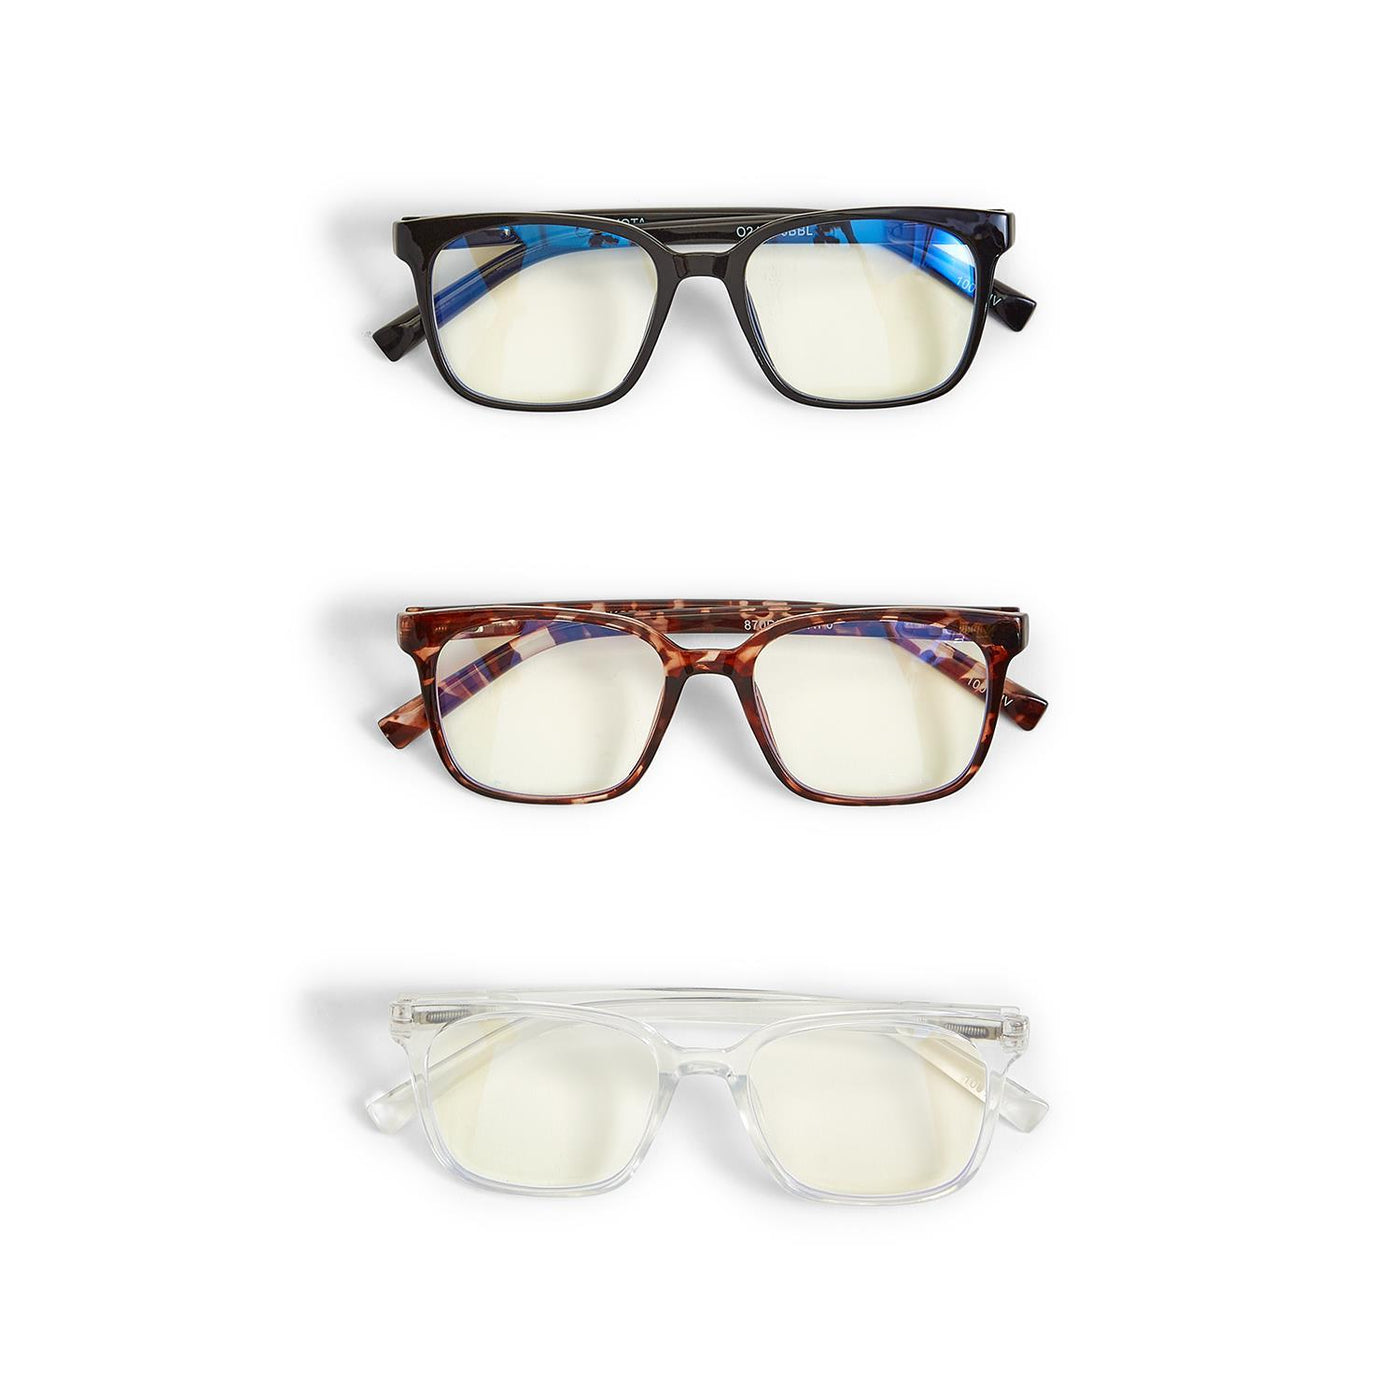 Anti-Blue Light Glasses in Pouch - Smockingbird's